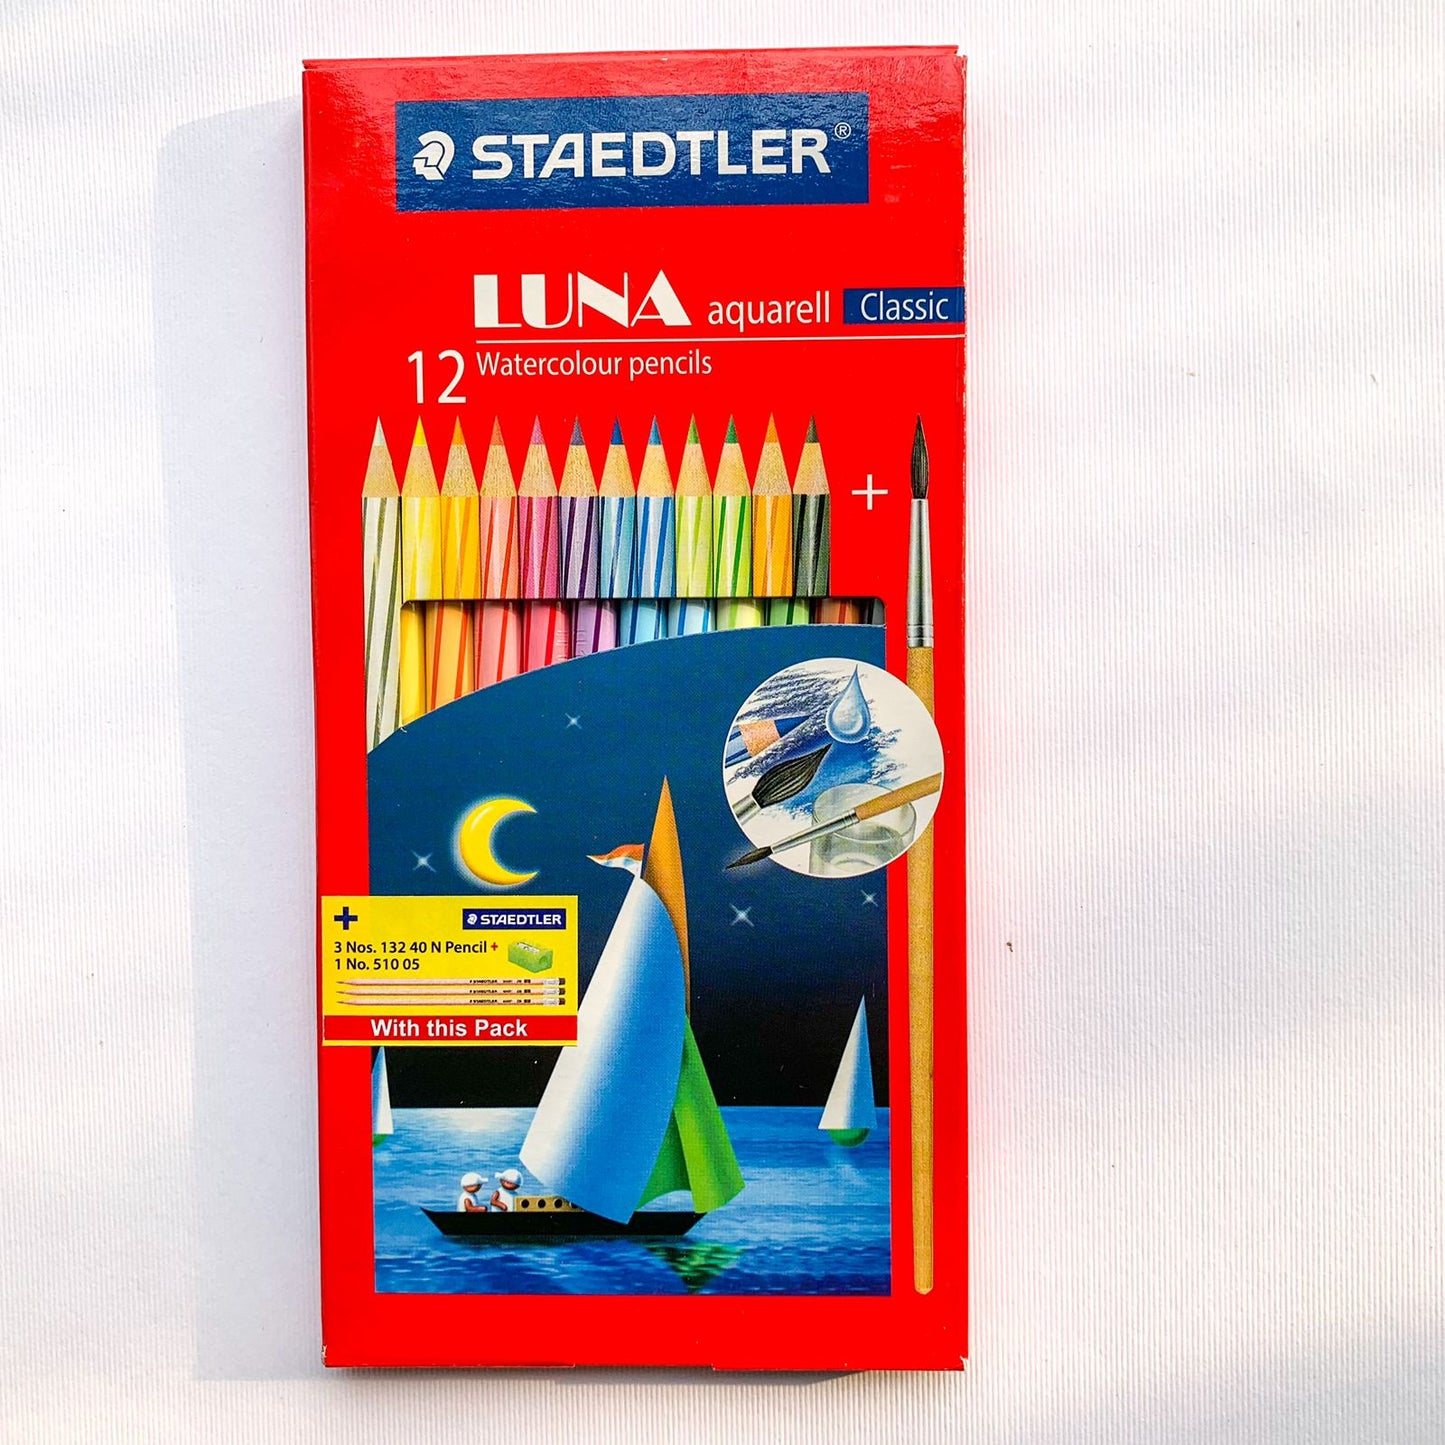 STAEDTLER - 12 Pcs Watercolor Pencil Set with Freebies 3 Pencils + 1 Sharpner